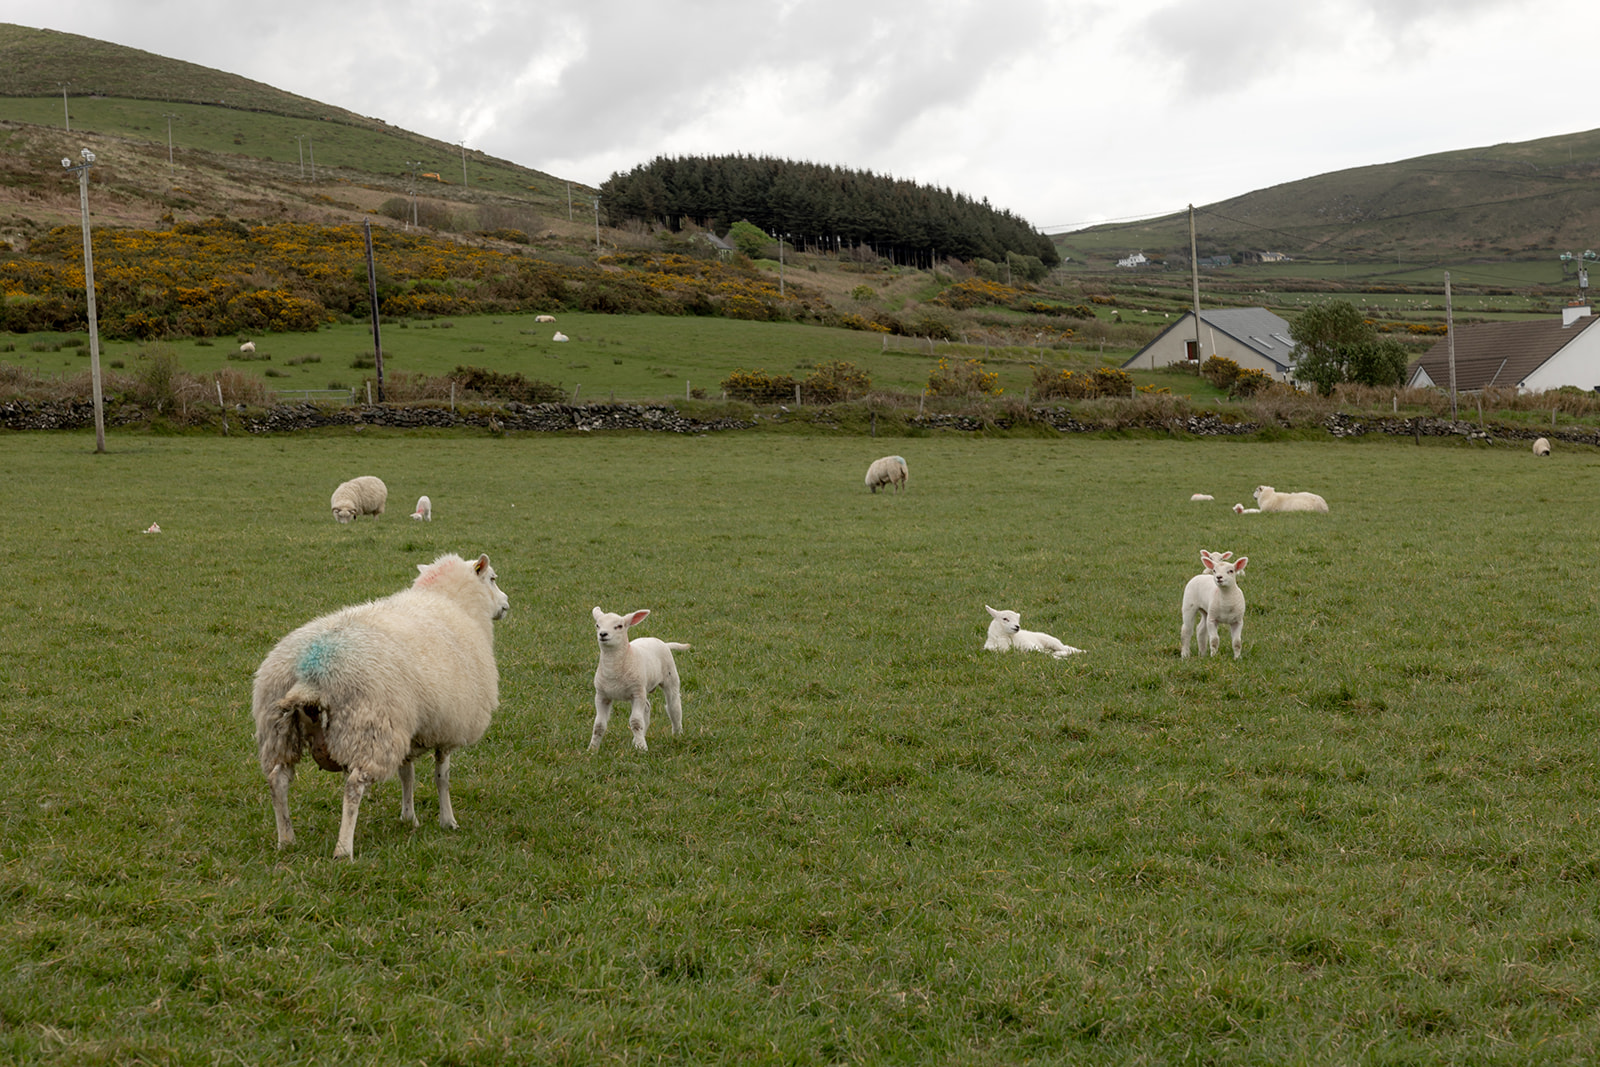 Sheep and lambs on the irish countryside.